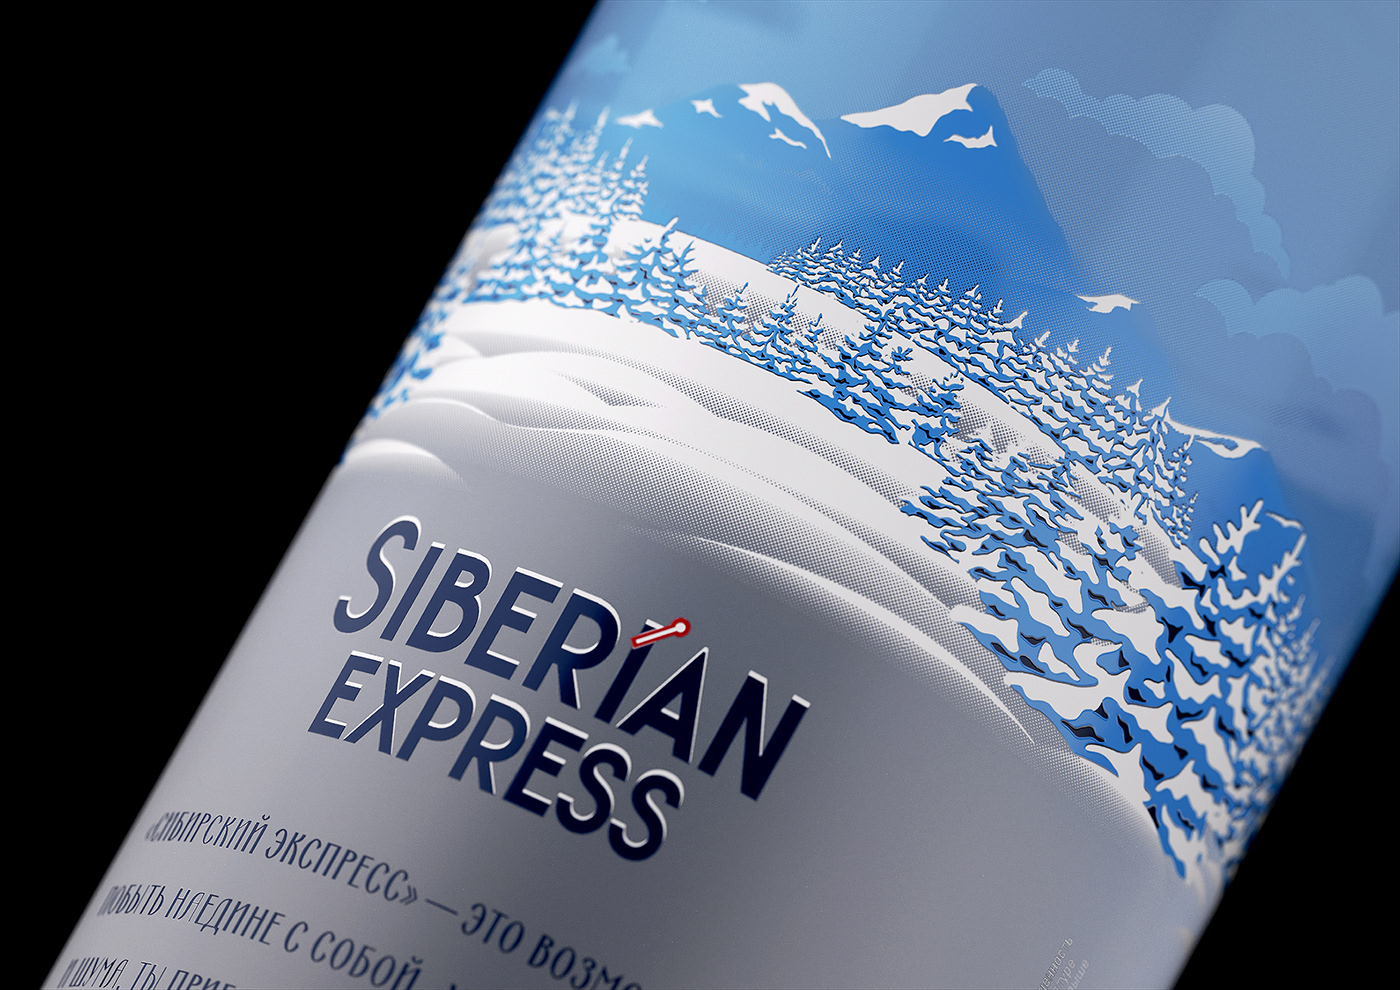 ASG express Siberia siberian Vodka АСГ водка сибирский Сибирь экспресс